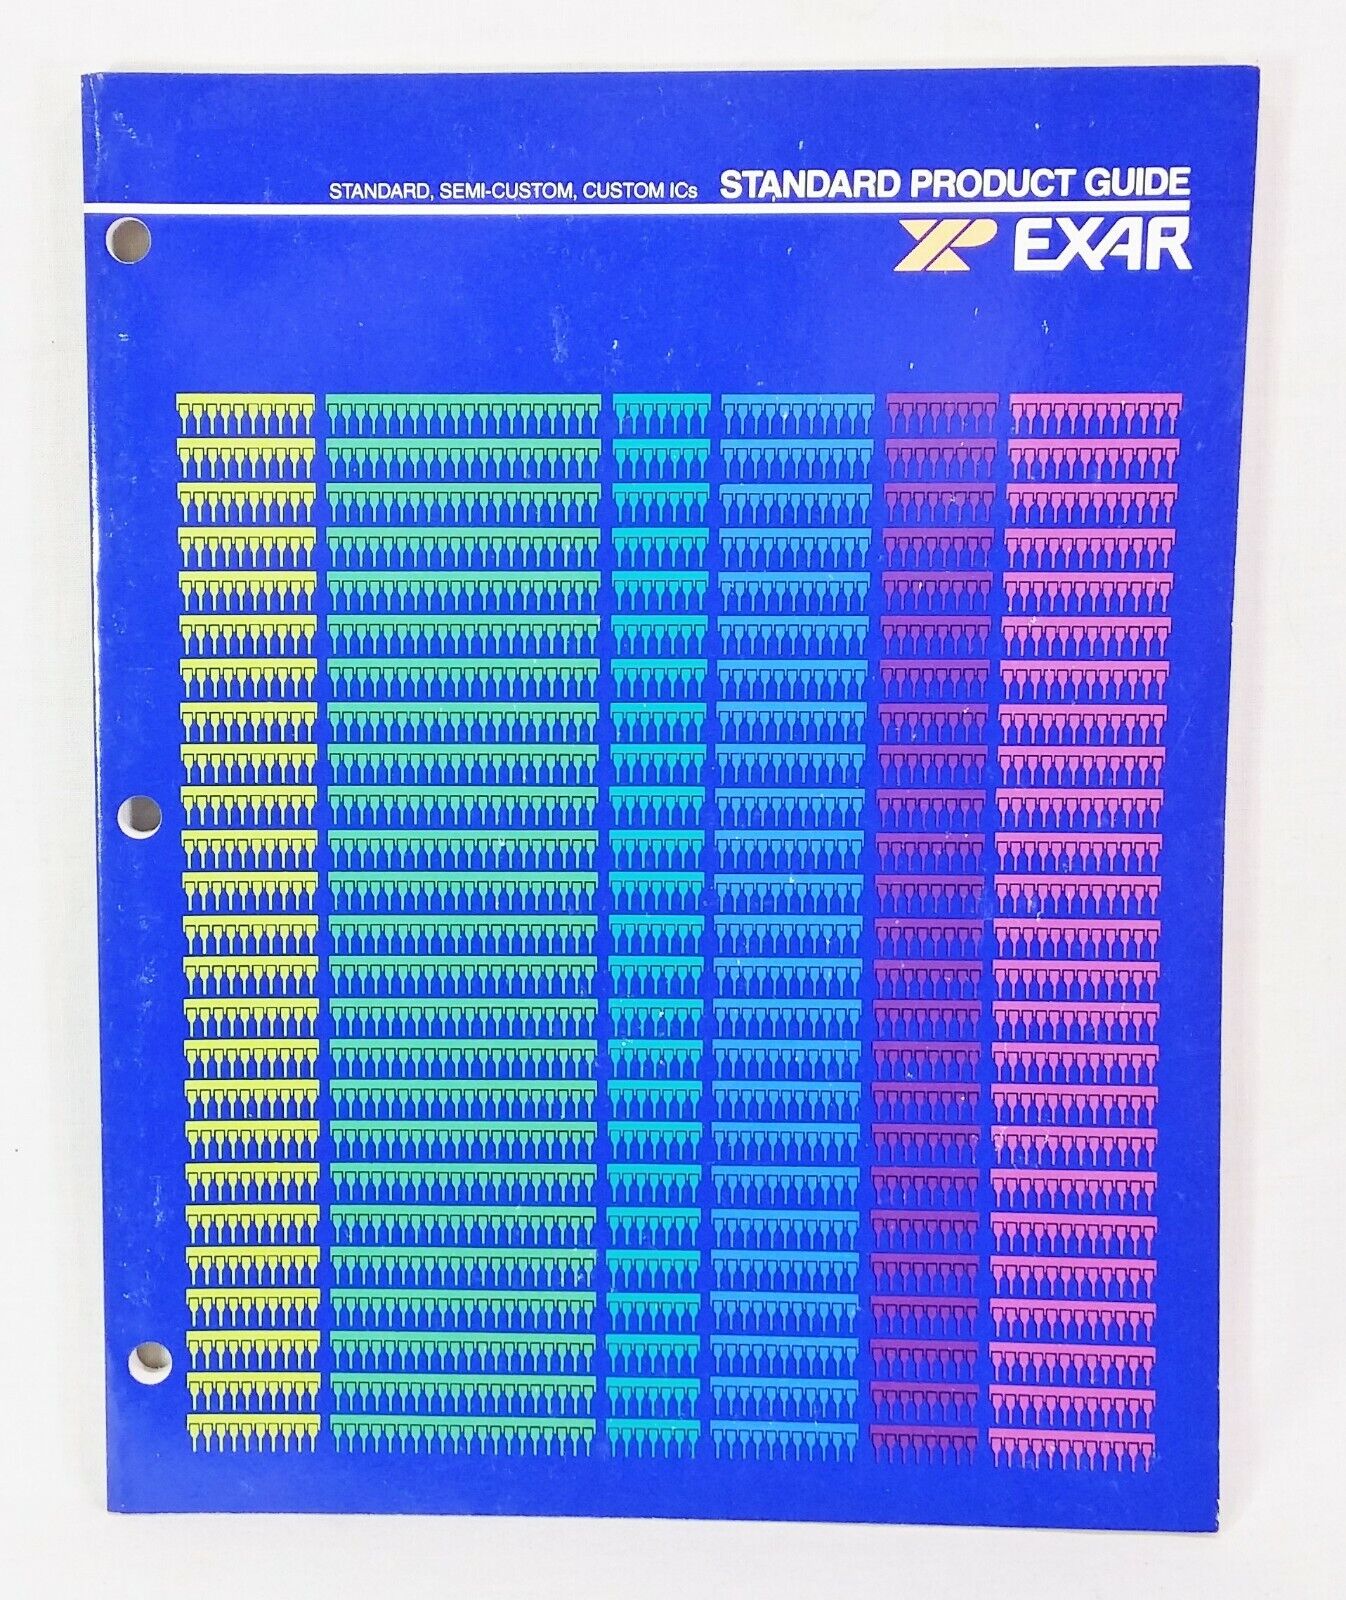 1983 Exar Standard Product Guide Standard, Custom, Semi-Custom ICs